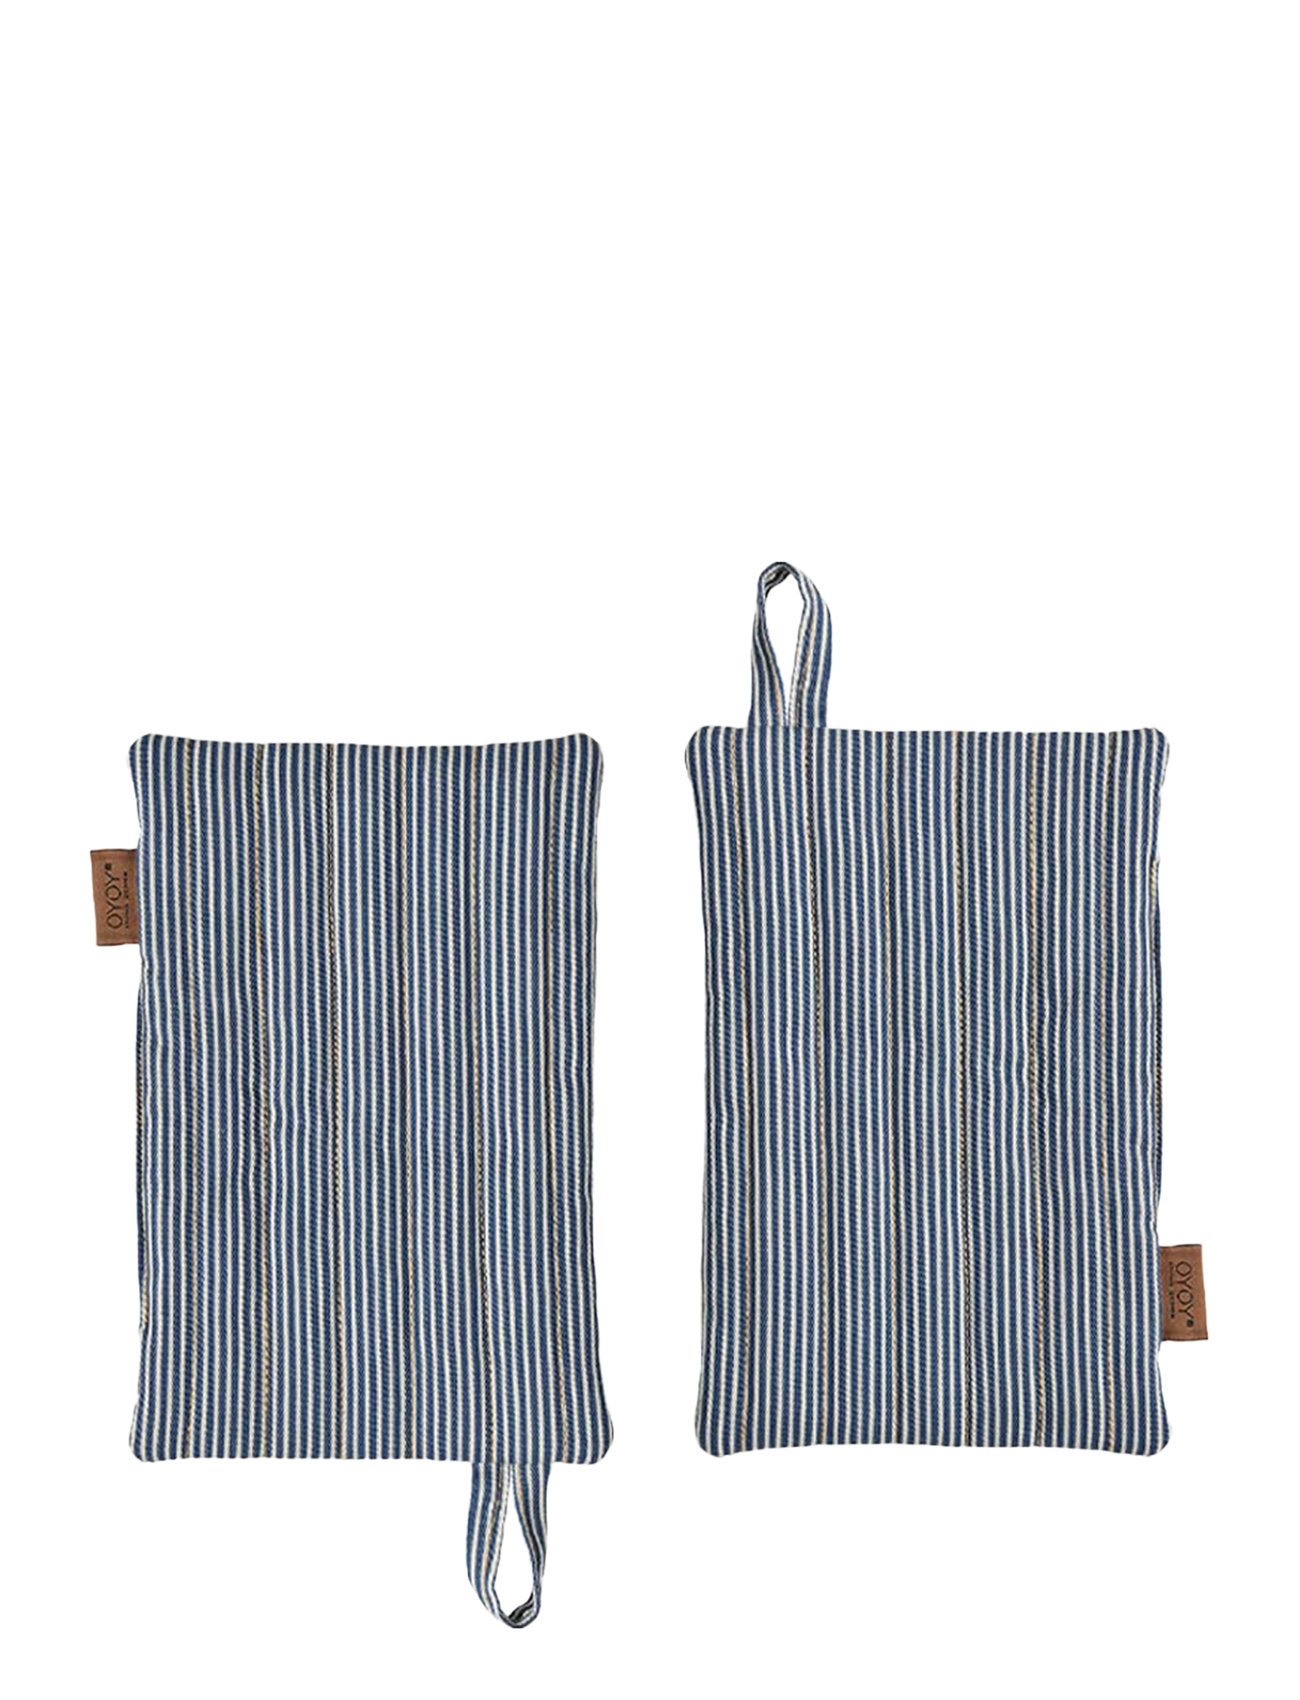 Striped Denim Potholder - Set Of 2 Home Textiles Kitchen Textiles Oven Mitts & Gloves Blue OYOY Living Design